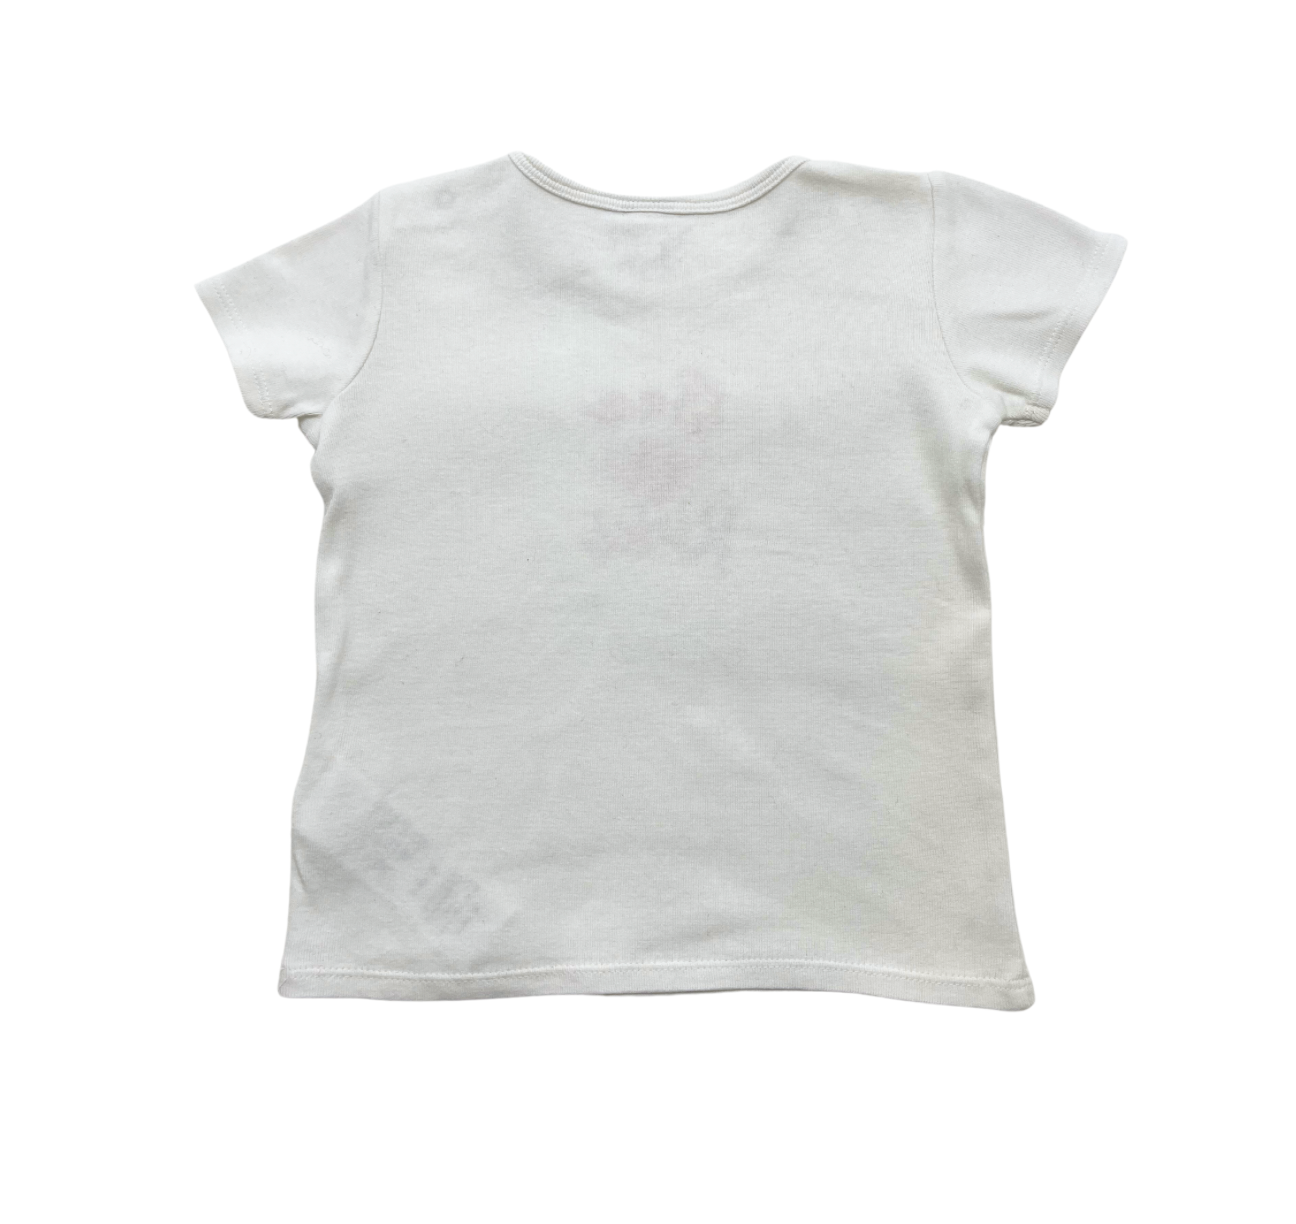 BONTON - T-shirt blanc "bee kind" - 18 mois